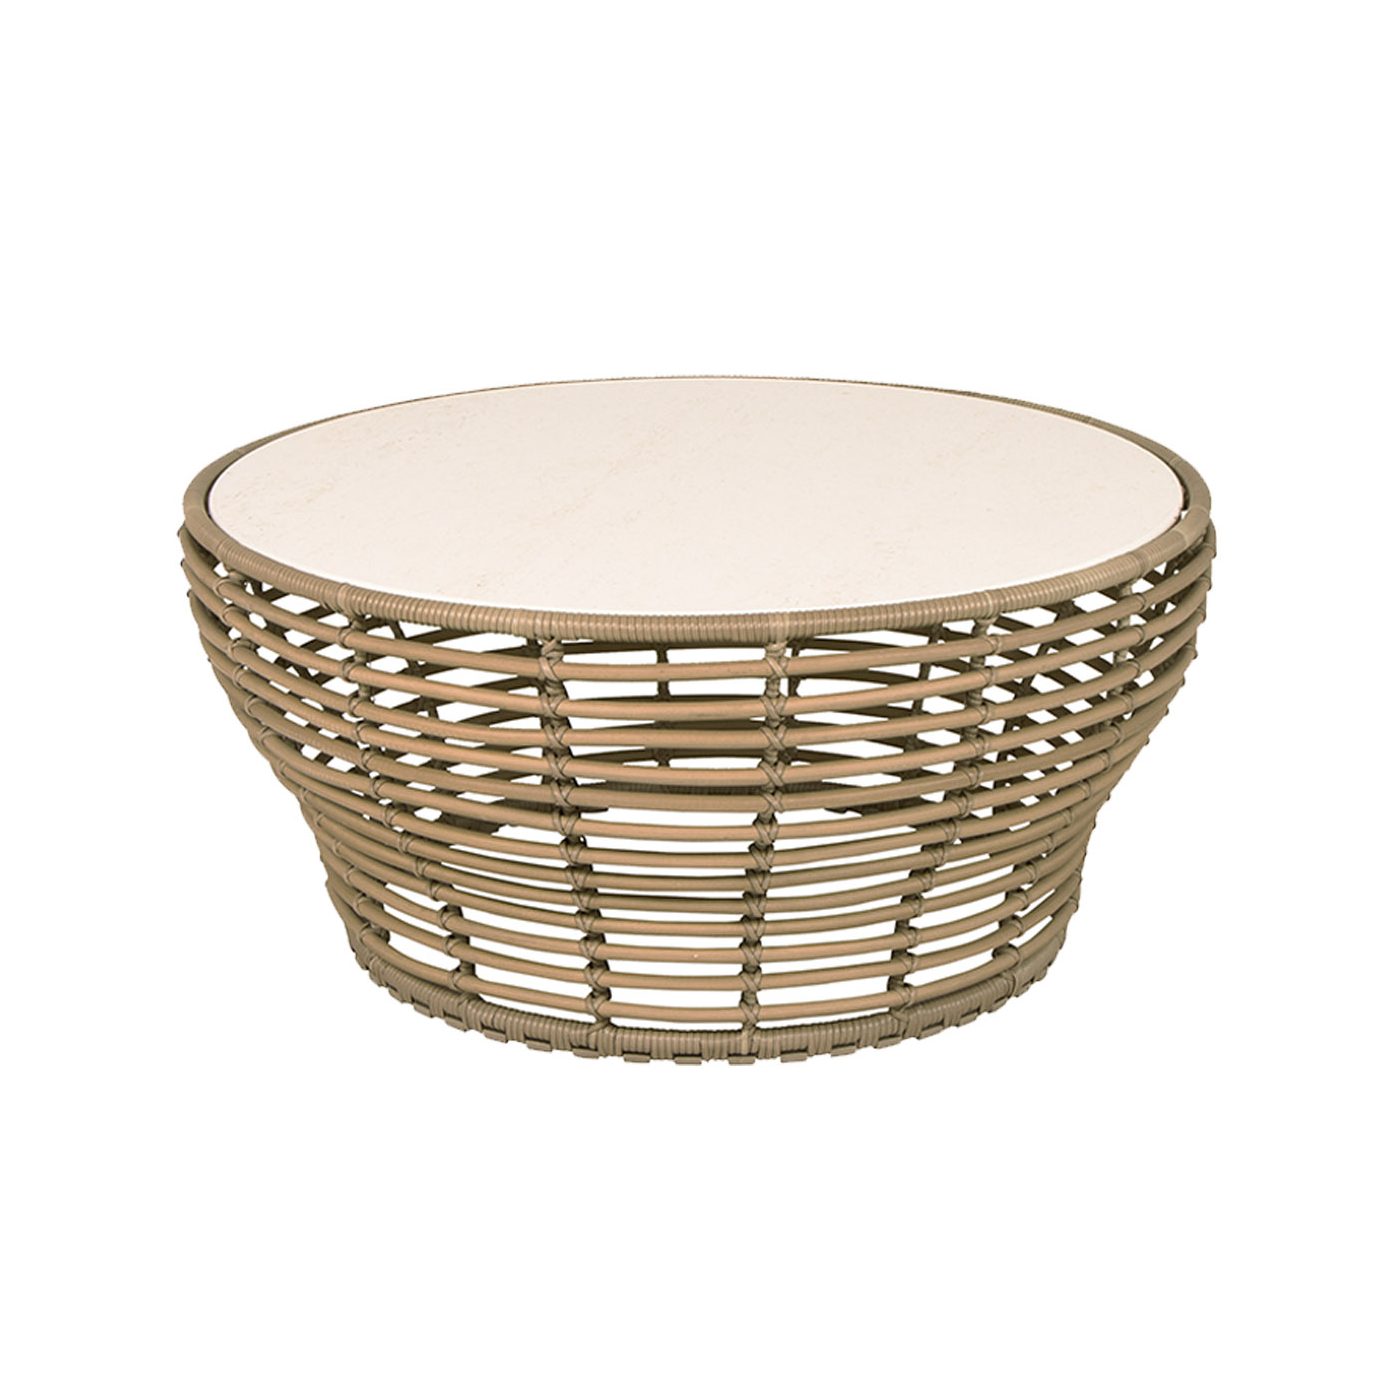 Cane-line "Basket" Loungetisch groß, Geflecht natur, Tischplatte Keramik Travertin-Optik, Ø 95 cm